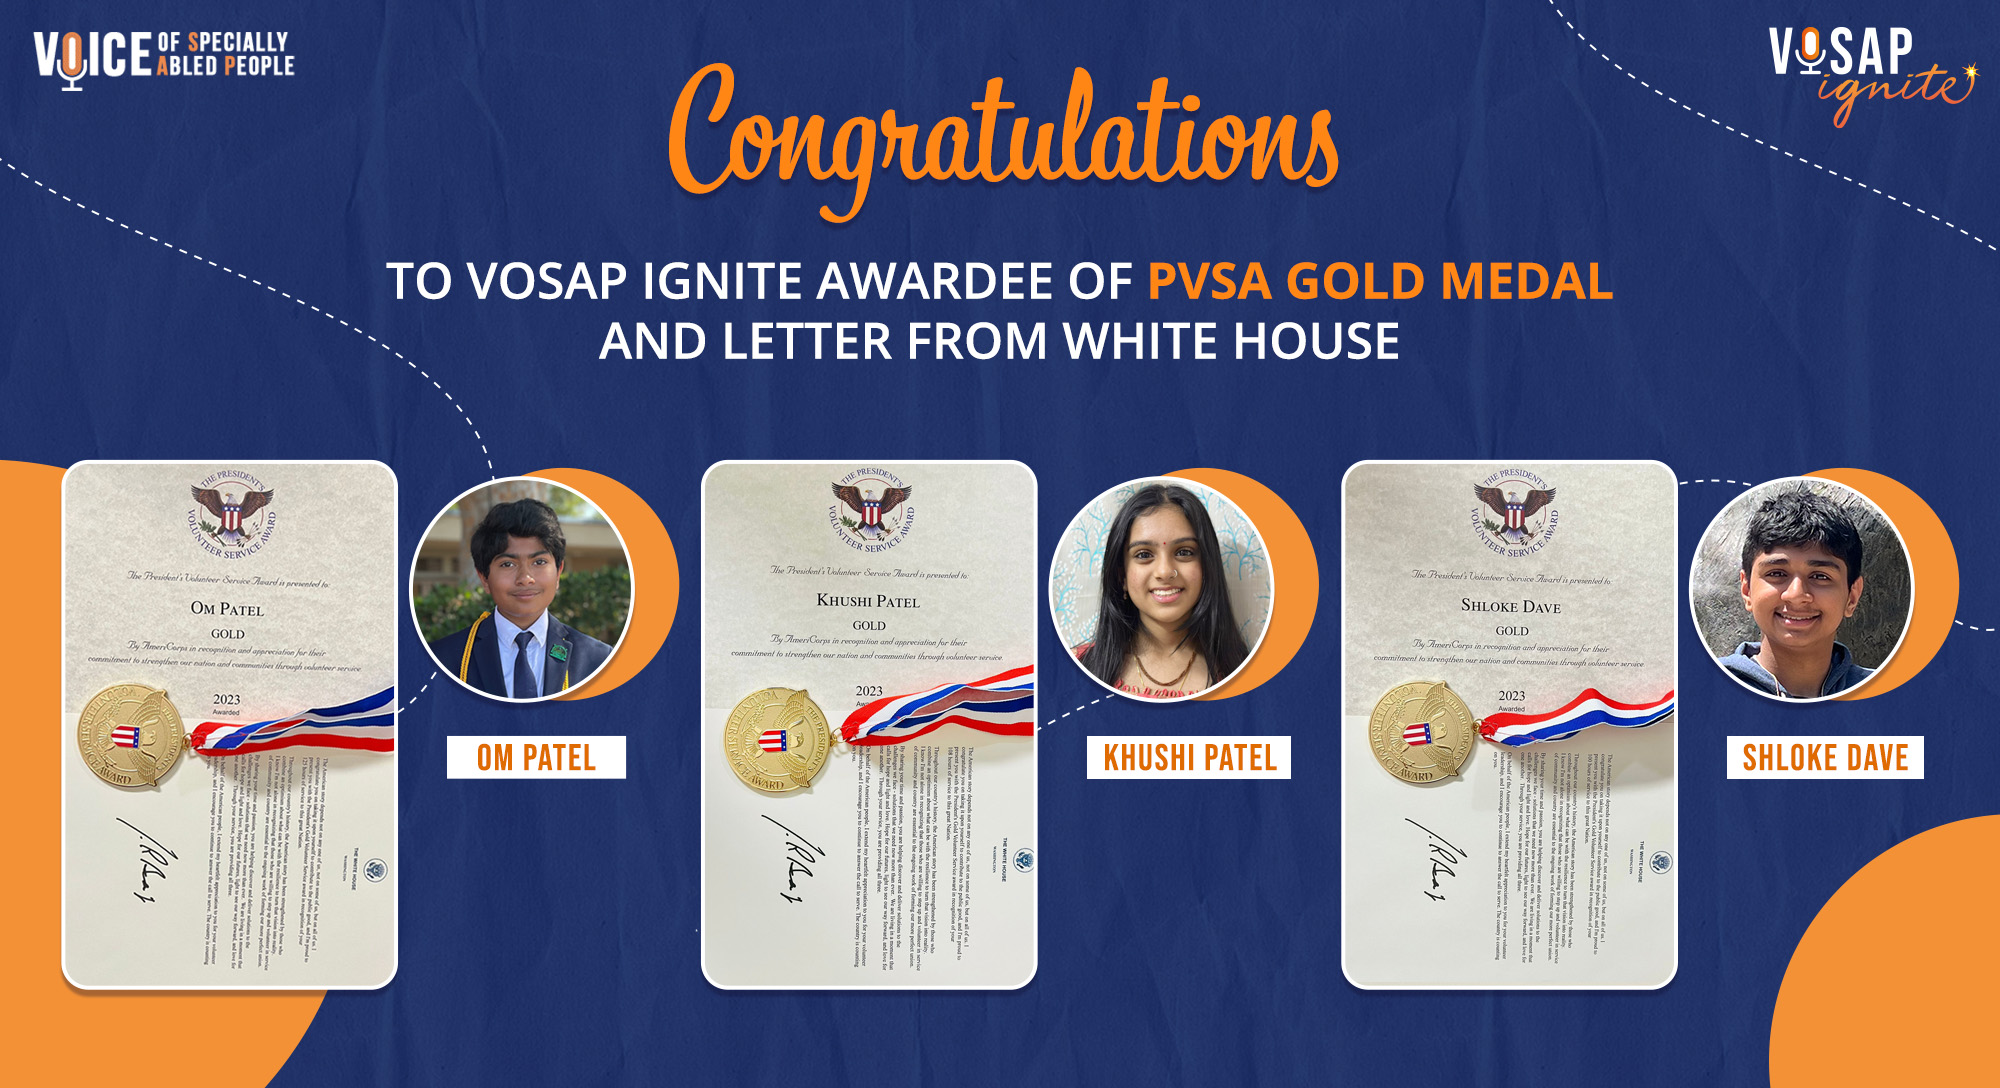 Congratulations to PVSA Awardees of VOSAP's Ignite Program